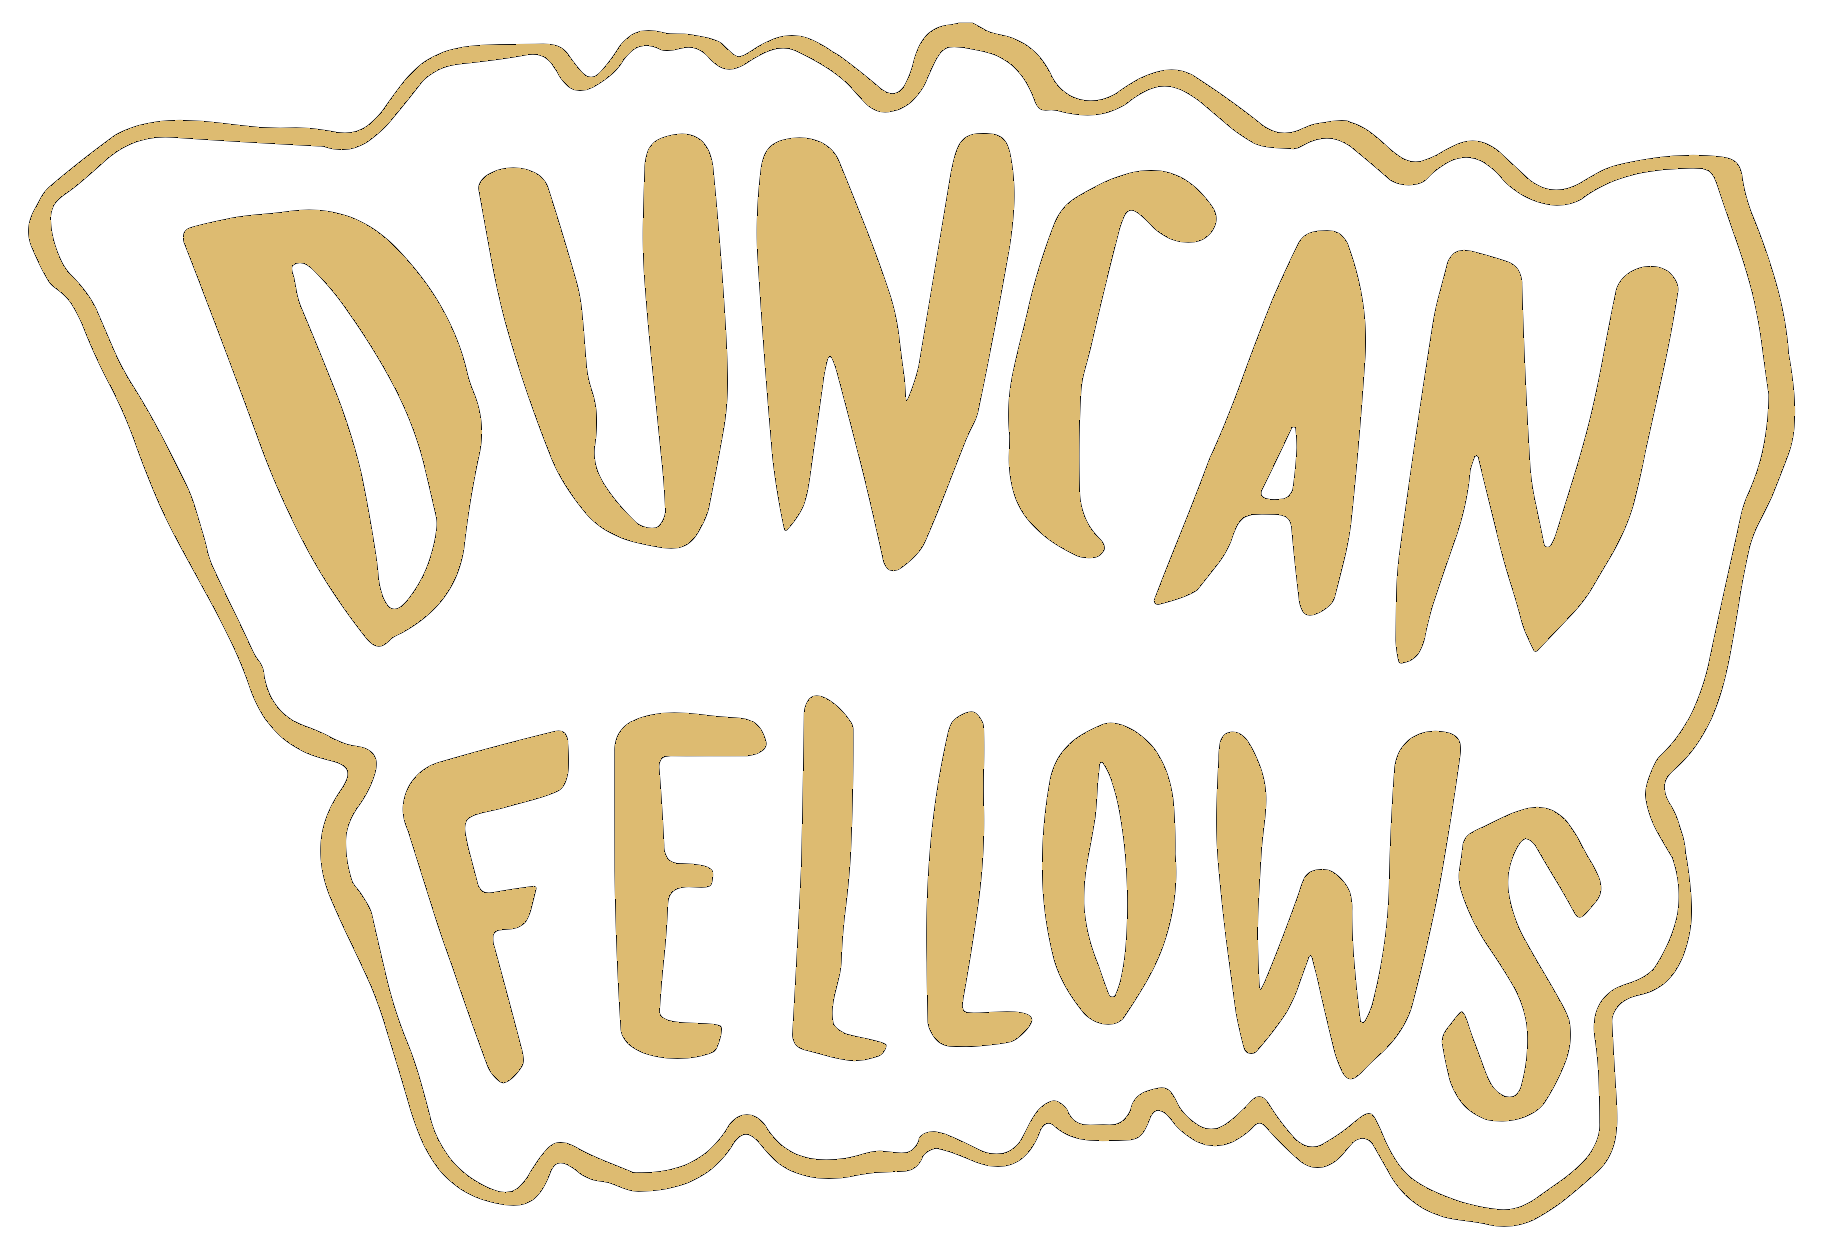 Duncan Fellows